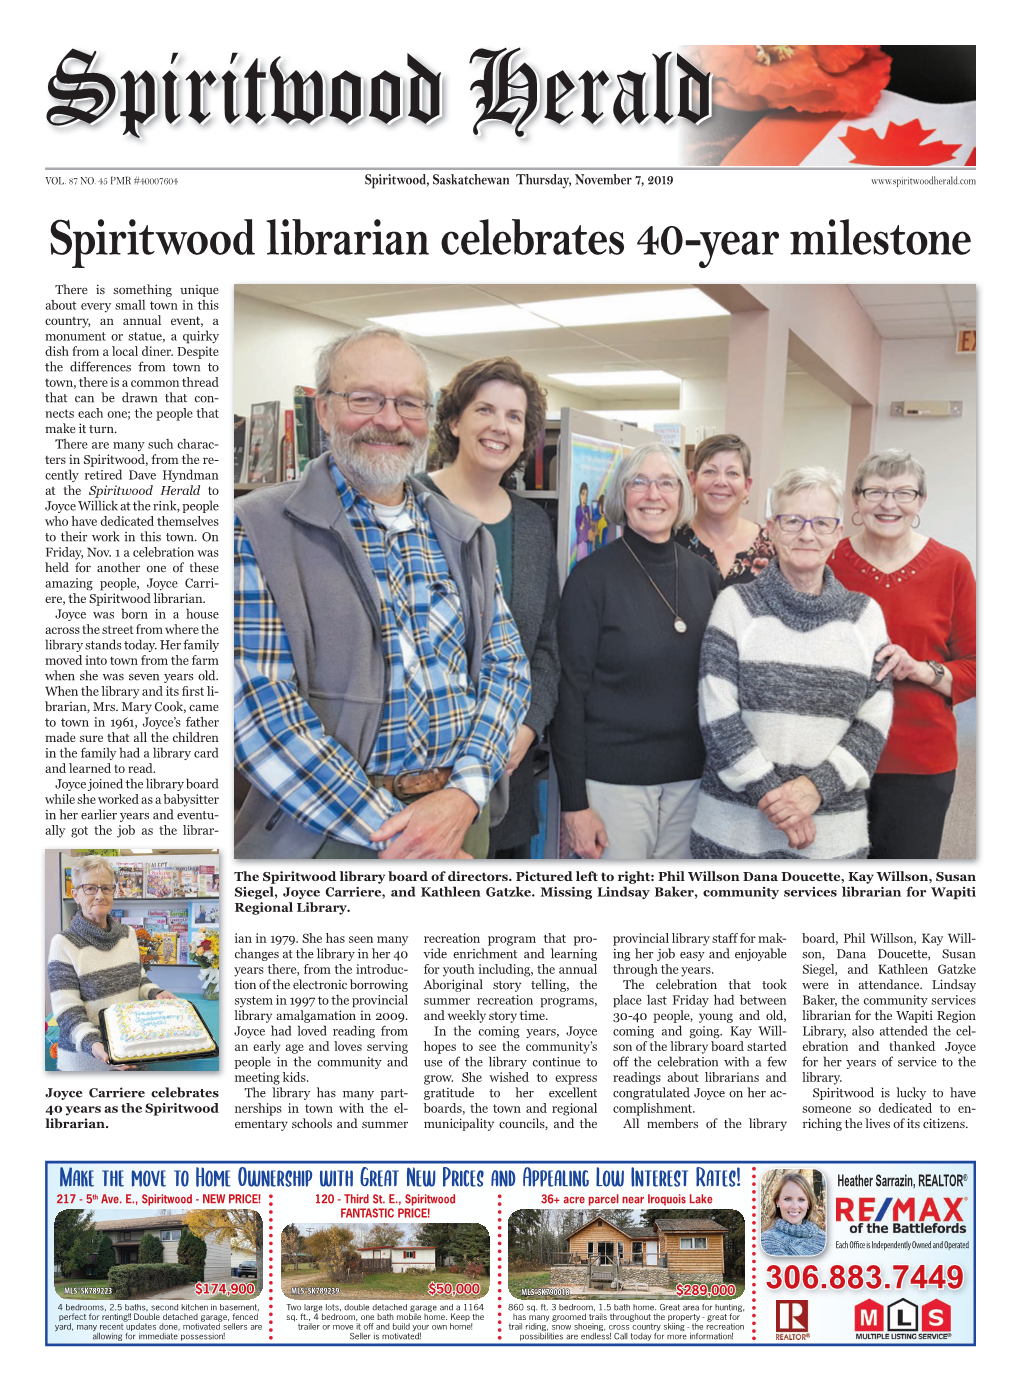 Spiritwood Librarian Celebrates 40-Year Milestone